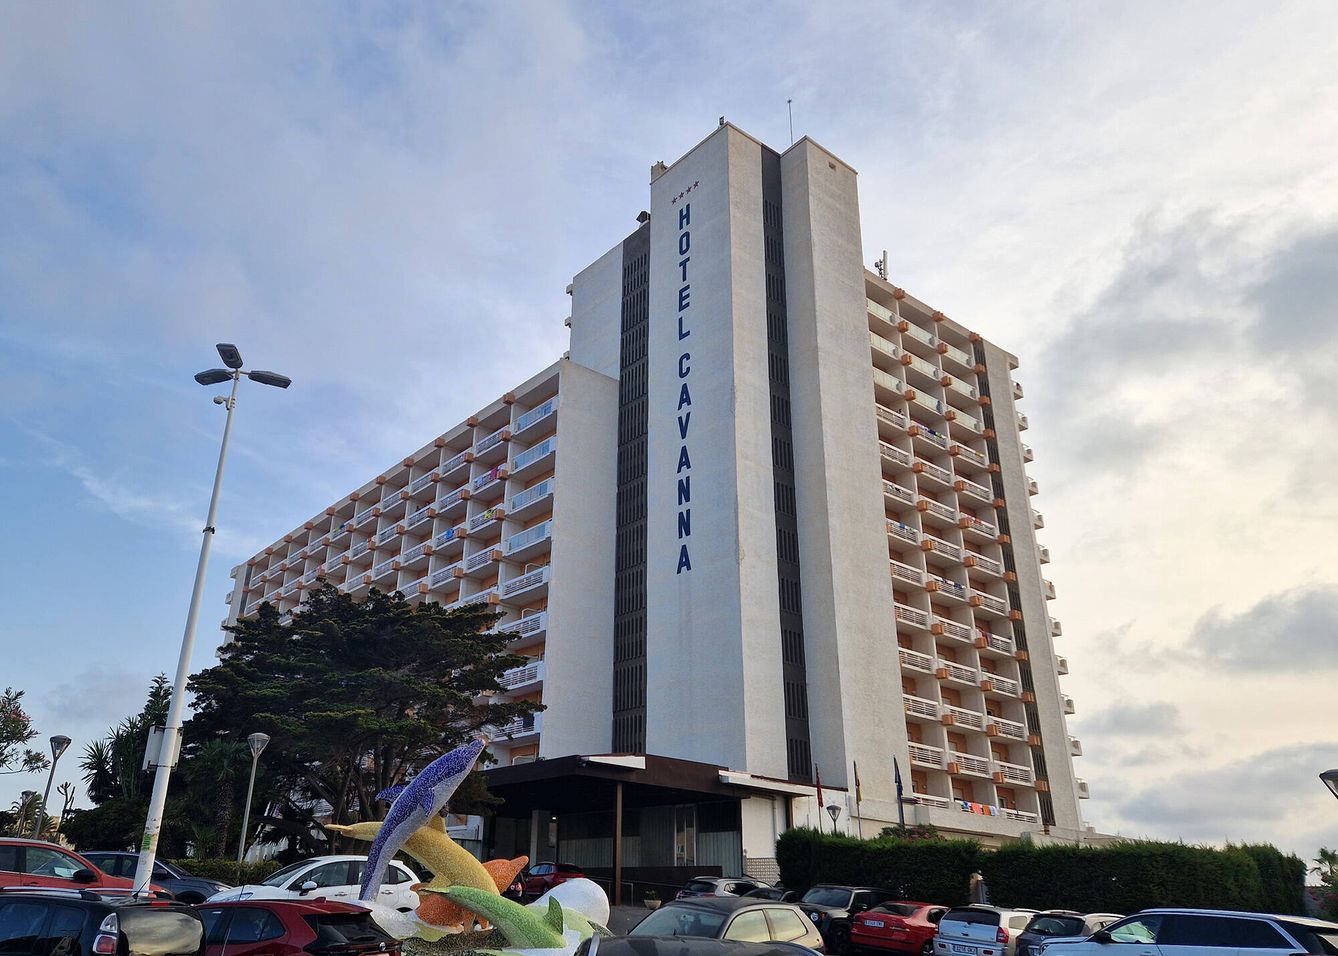 El hotel Cavanna, en La Manga. (EC)